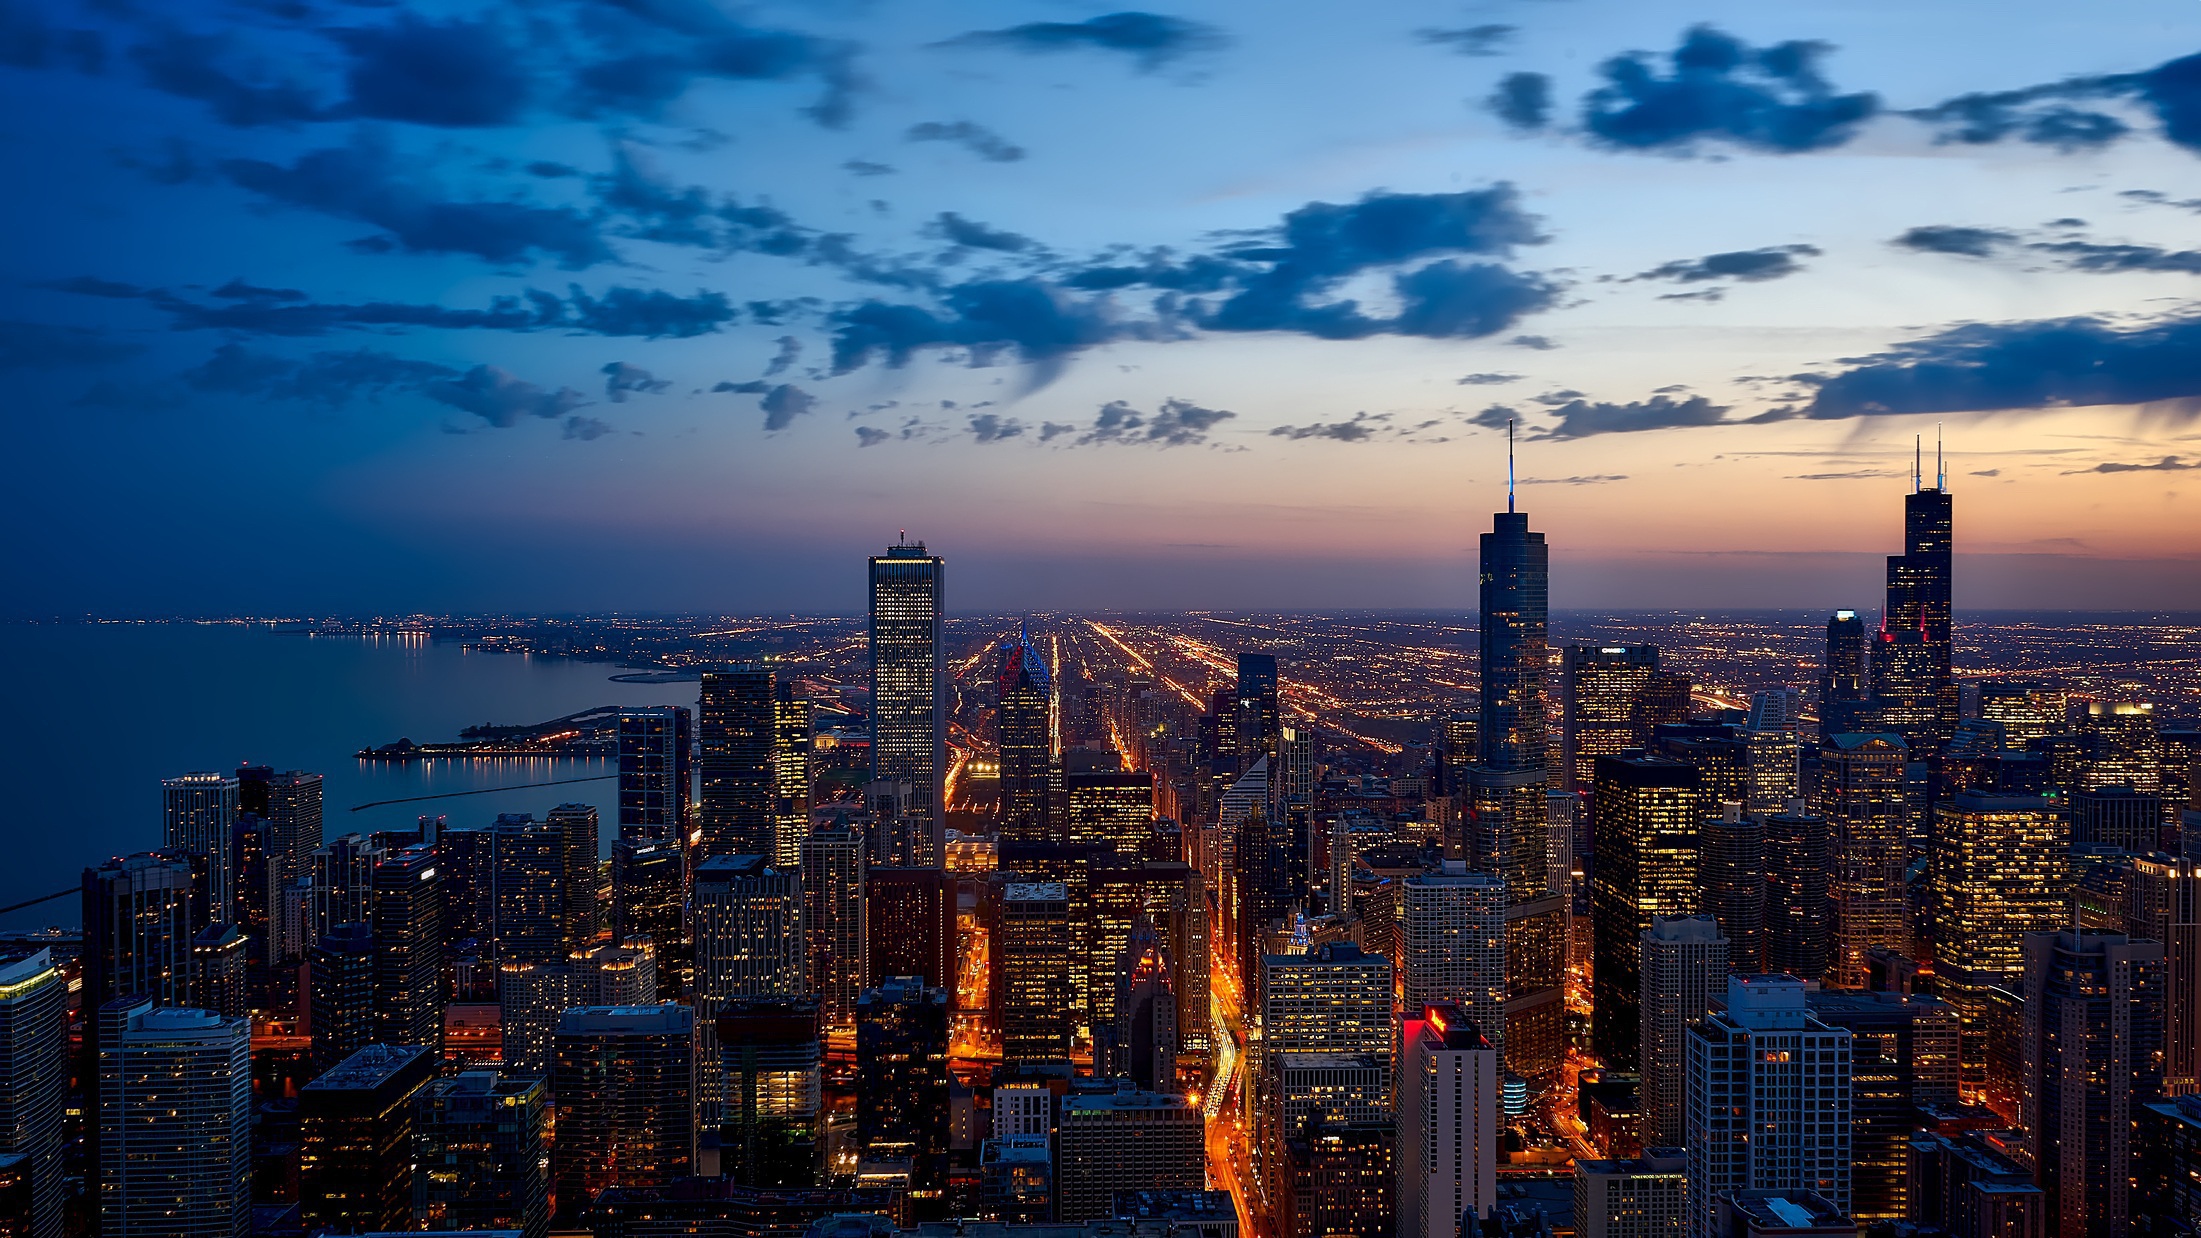 Image of Chicago Skyline at night.